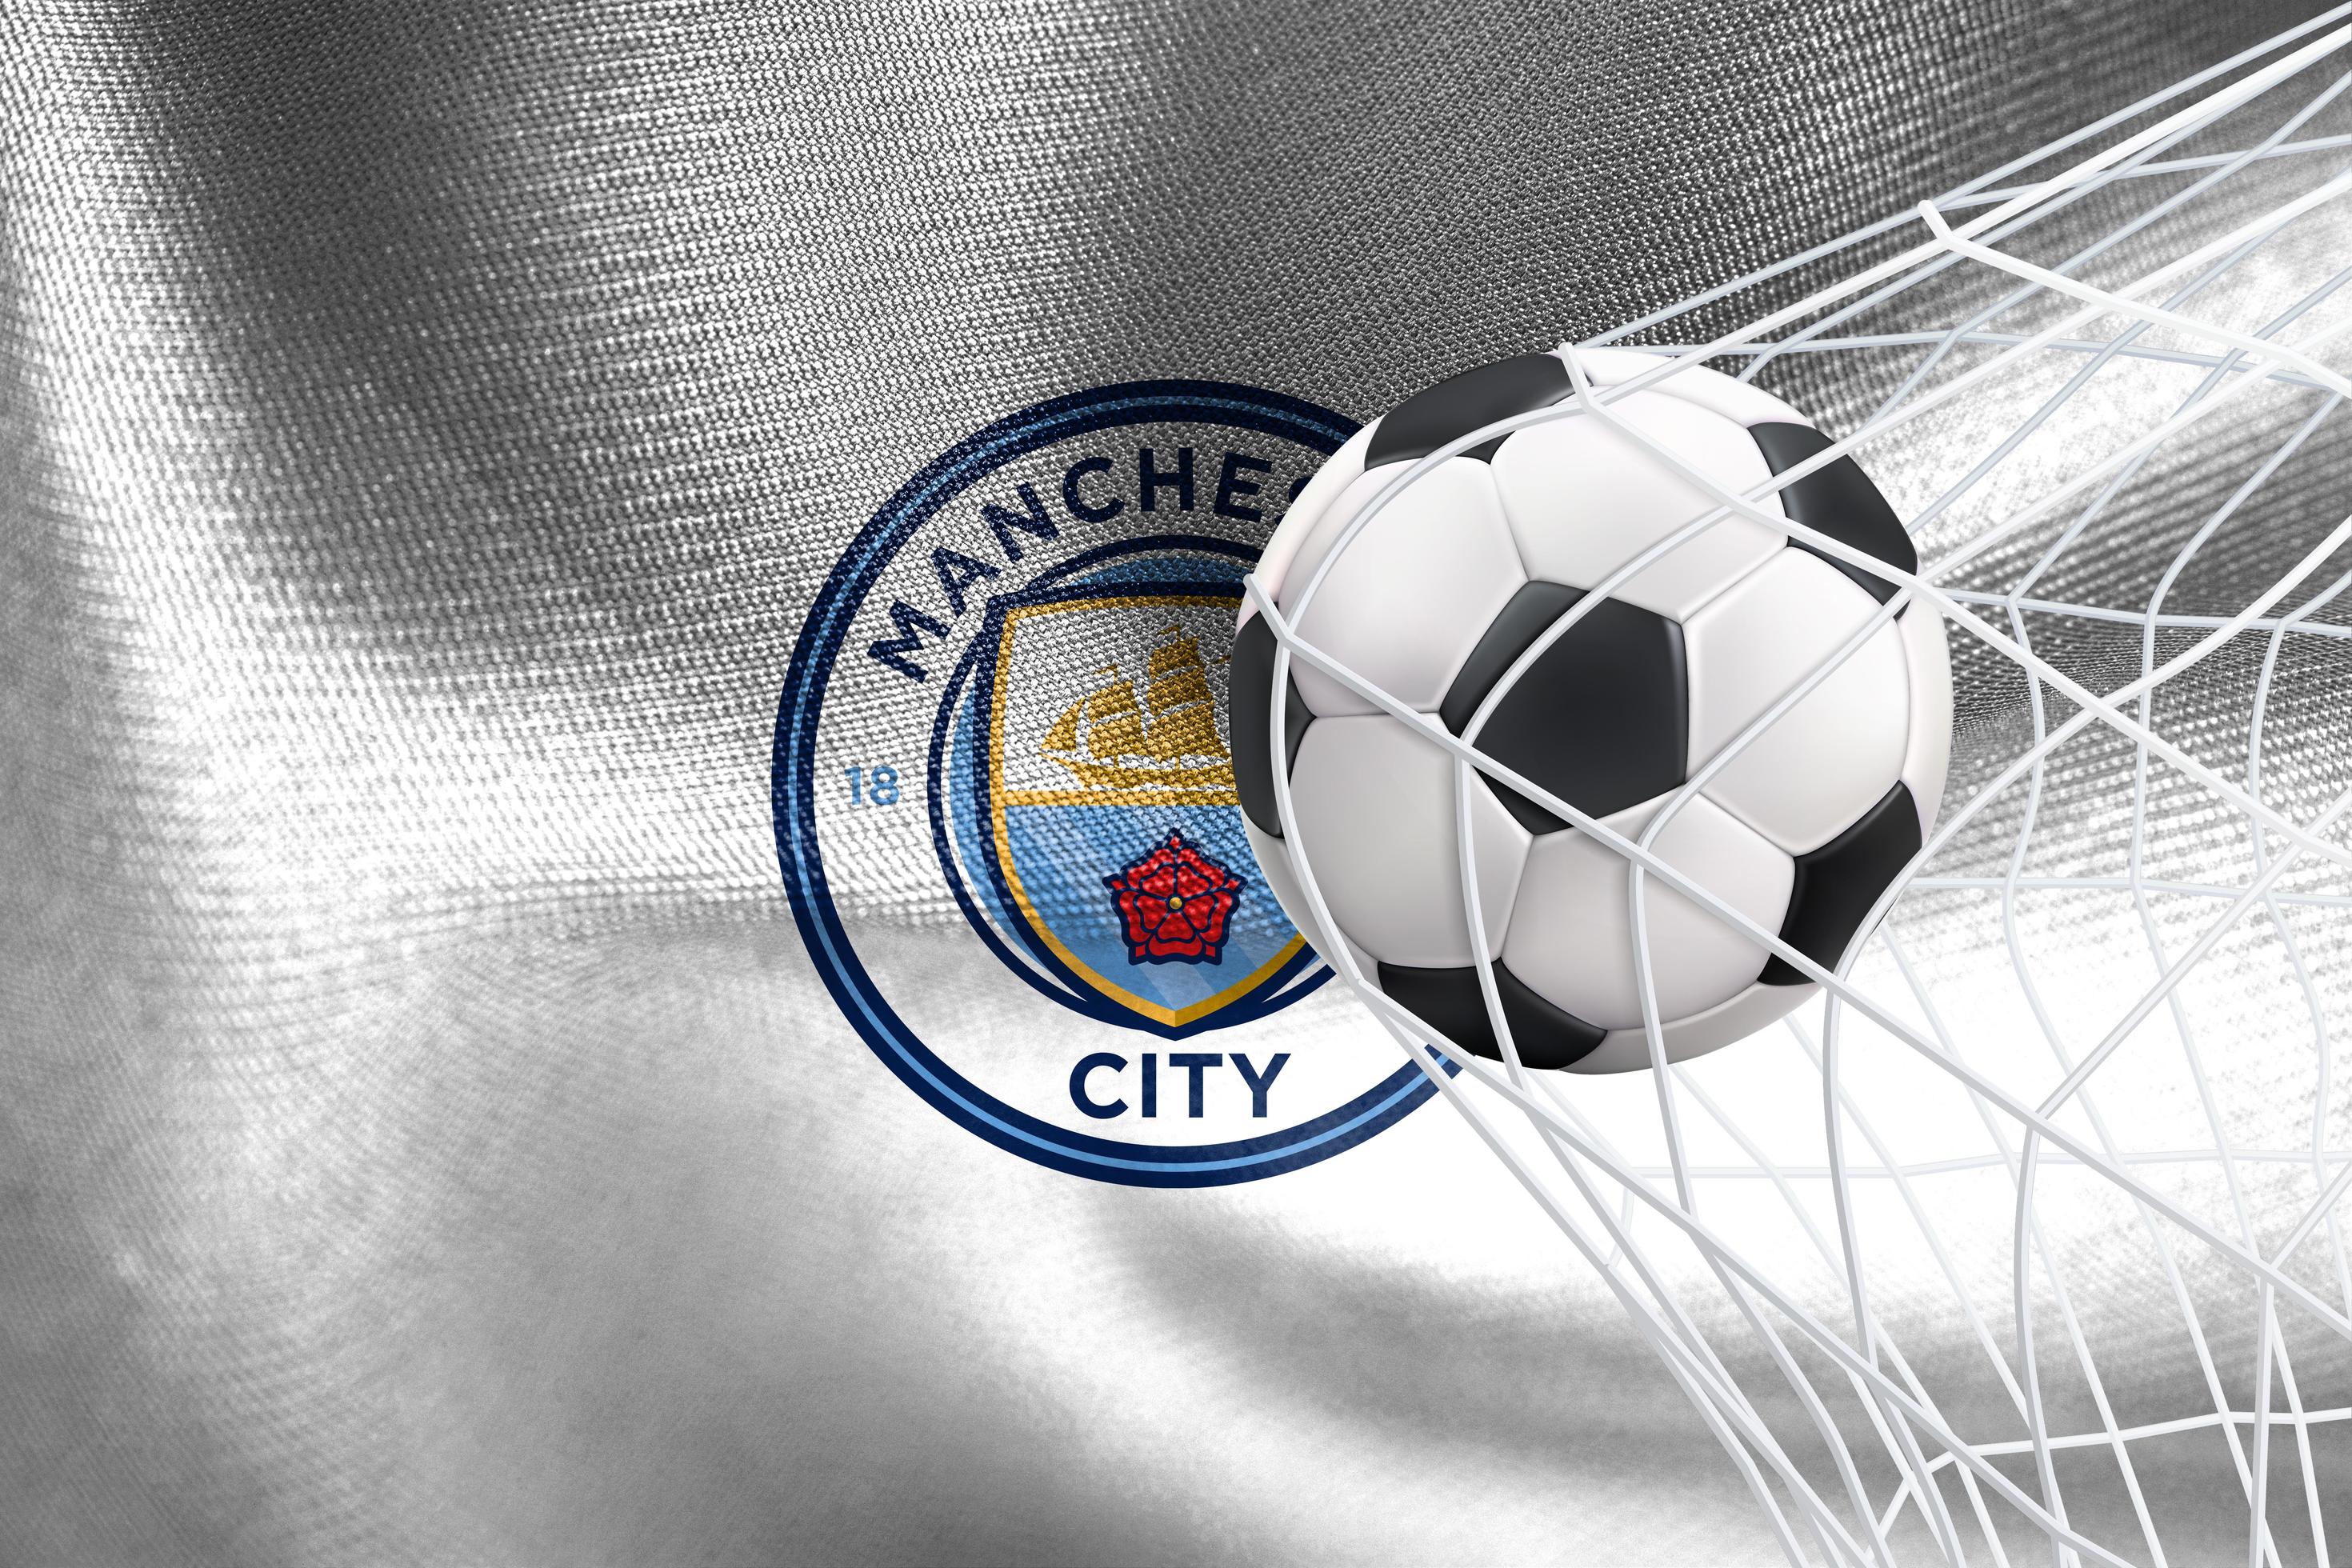 Premier league football club Manchester City FC logo 2K wallpaper download